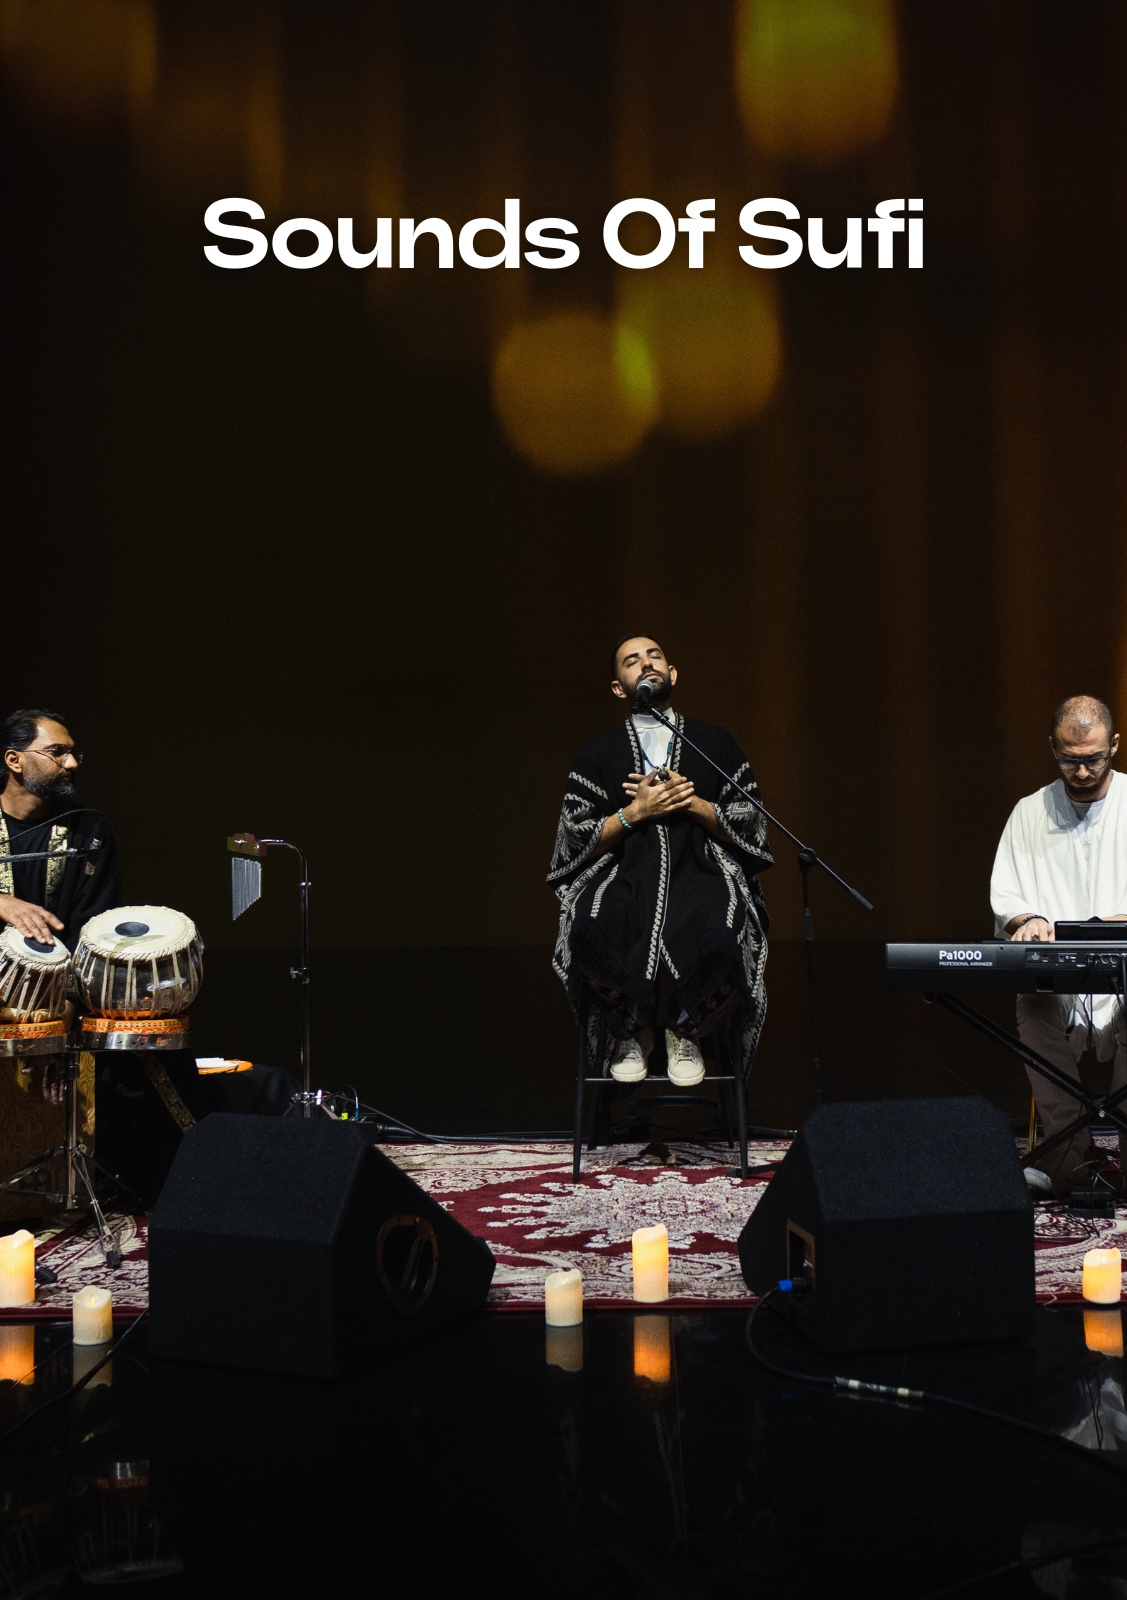 Sounds of Sufi